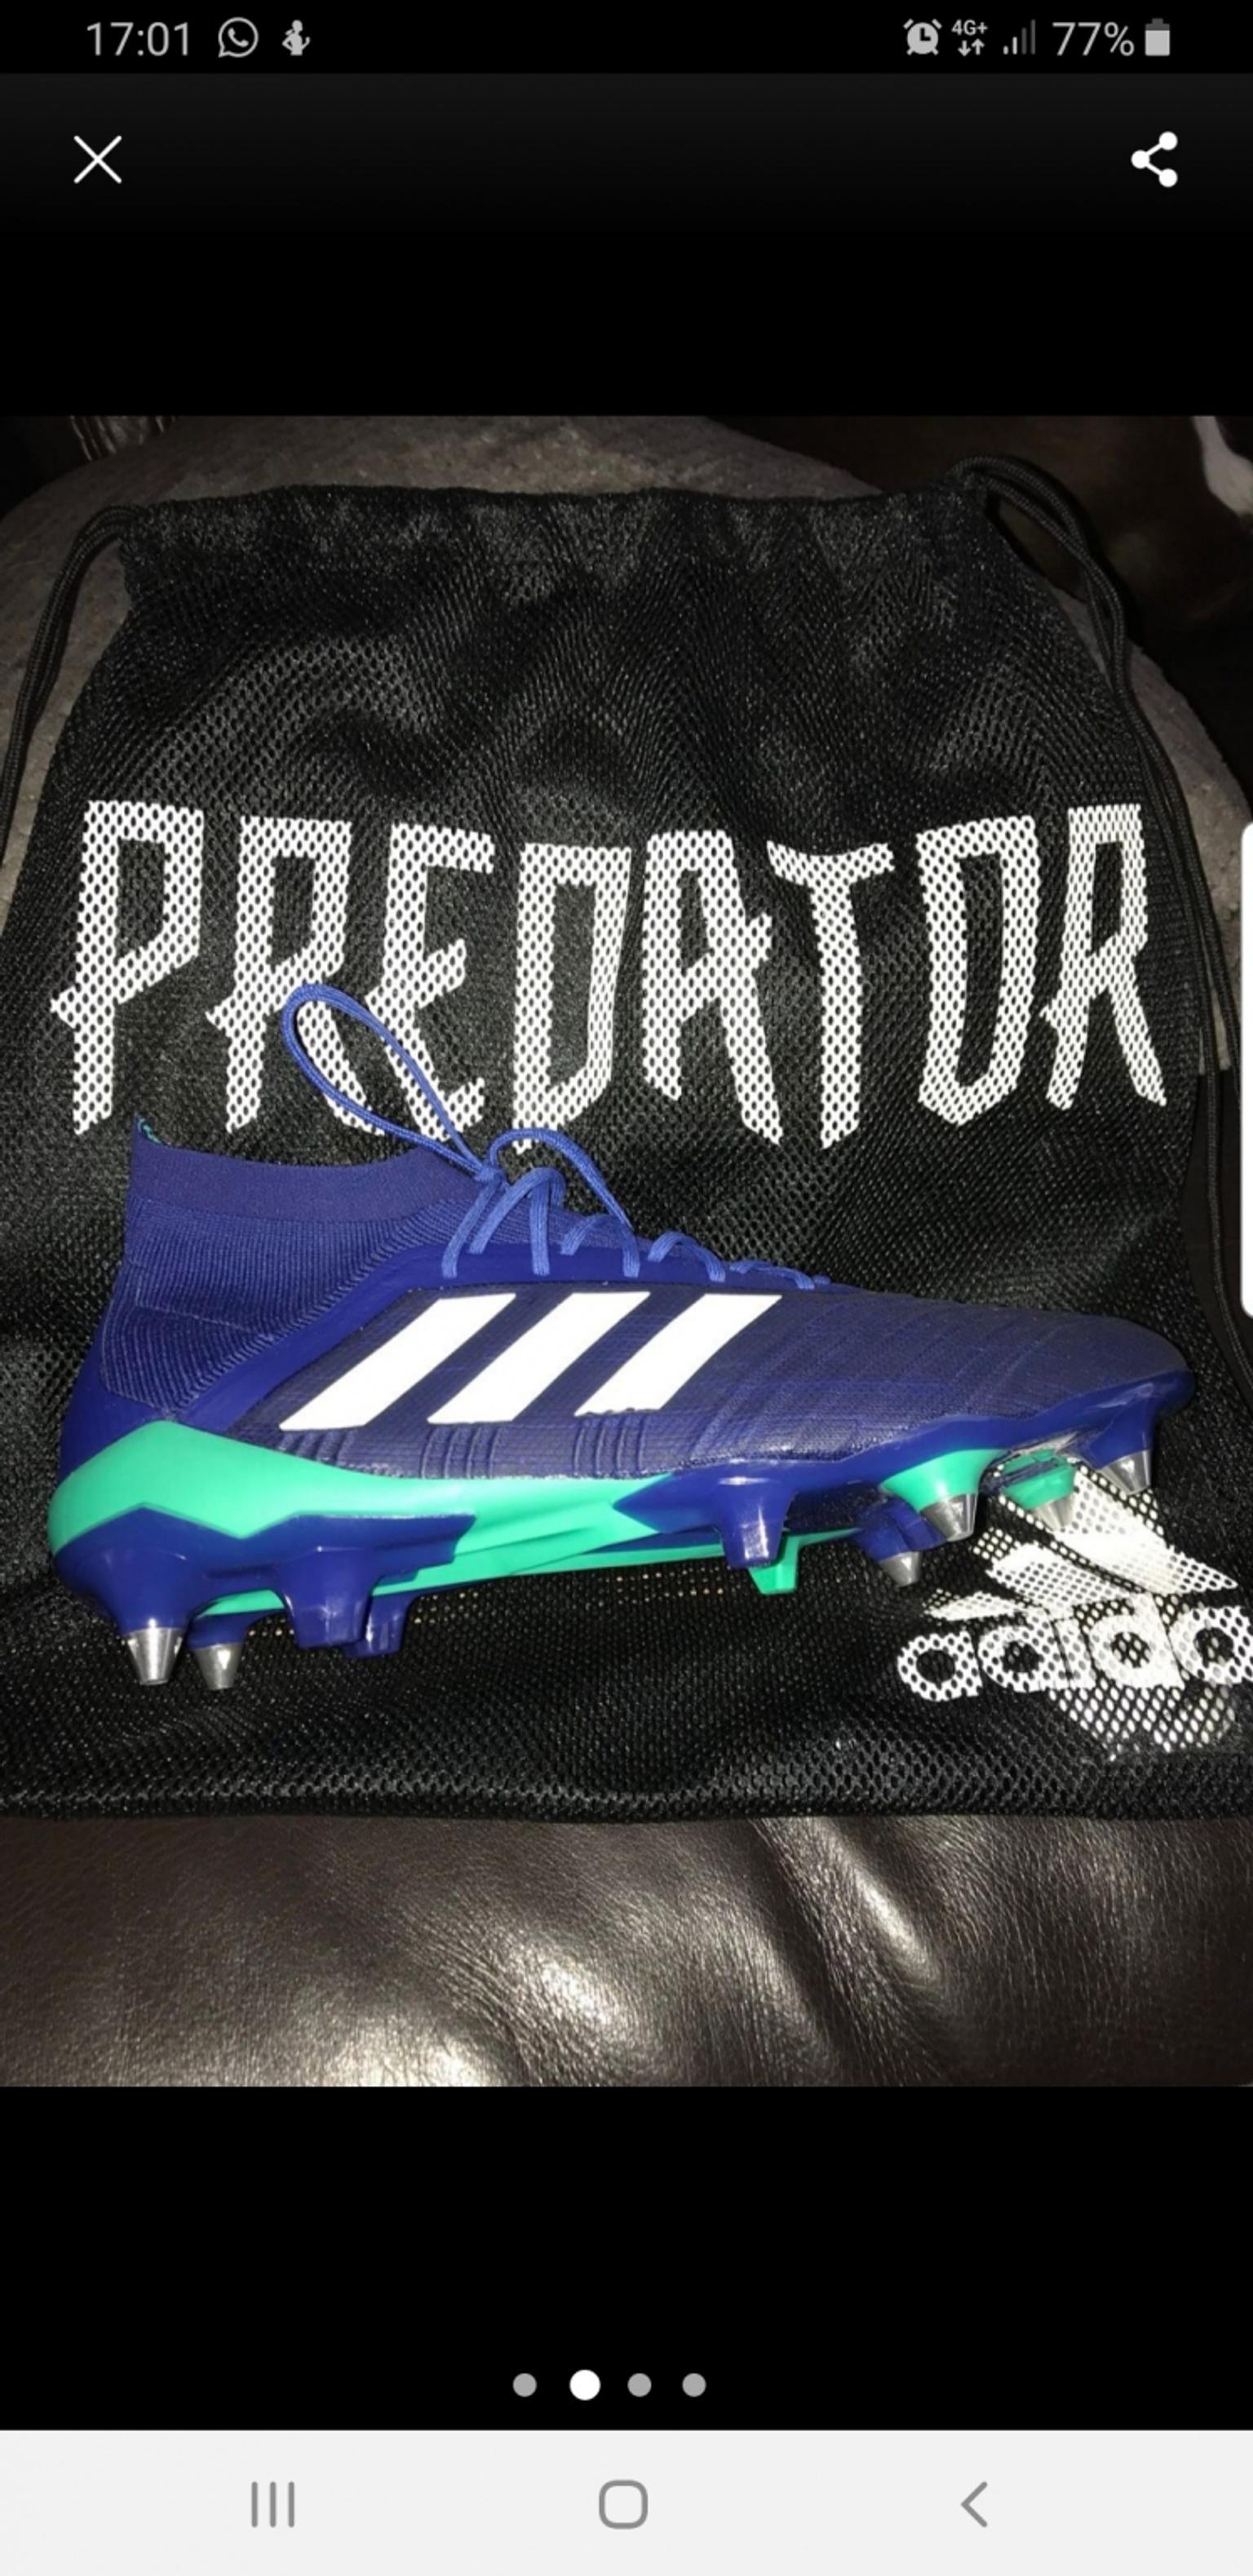 predator 18.1 football boots